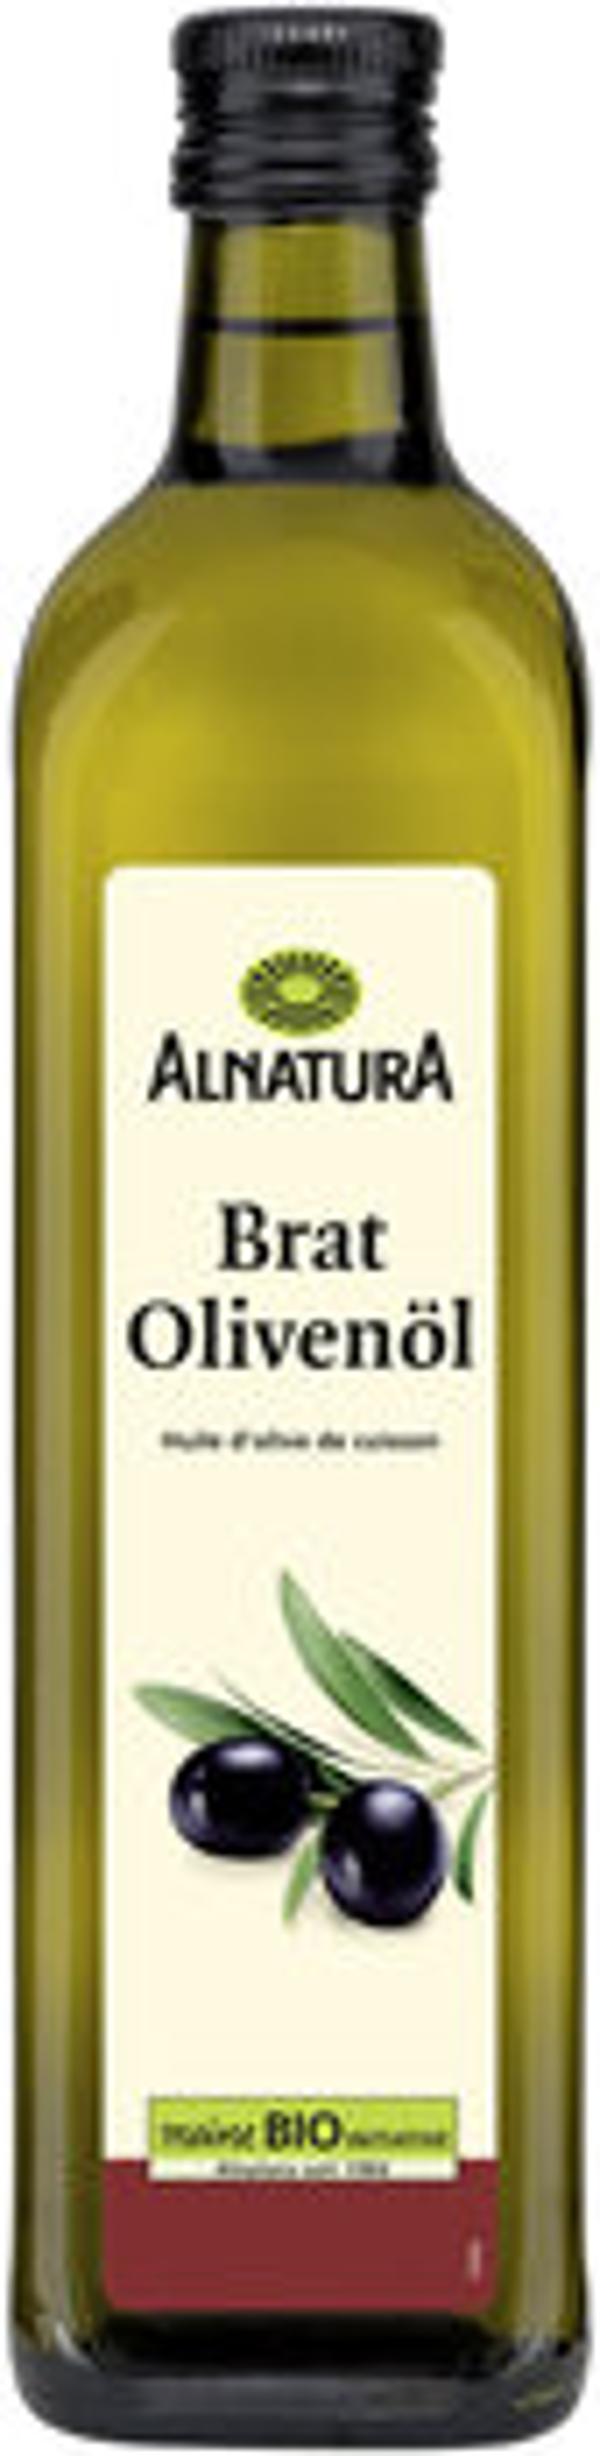 Produktfoto zu Alnatura Brat Olivenöl 750ml